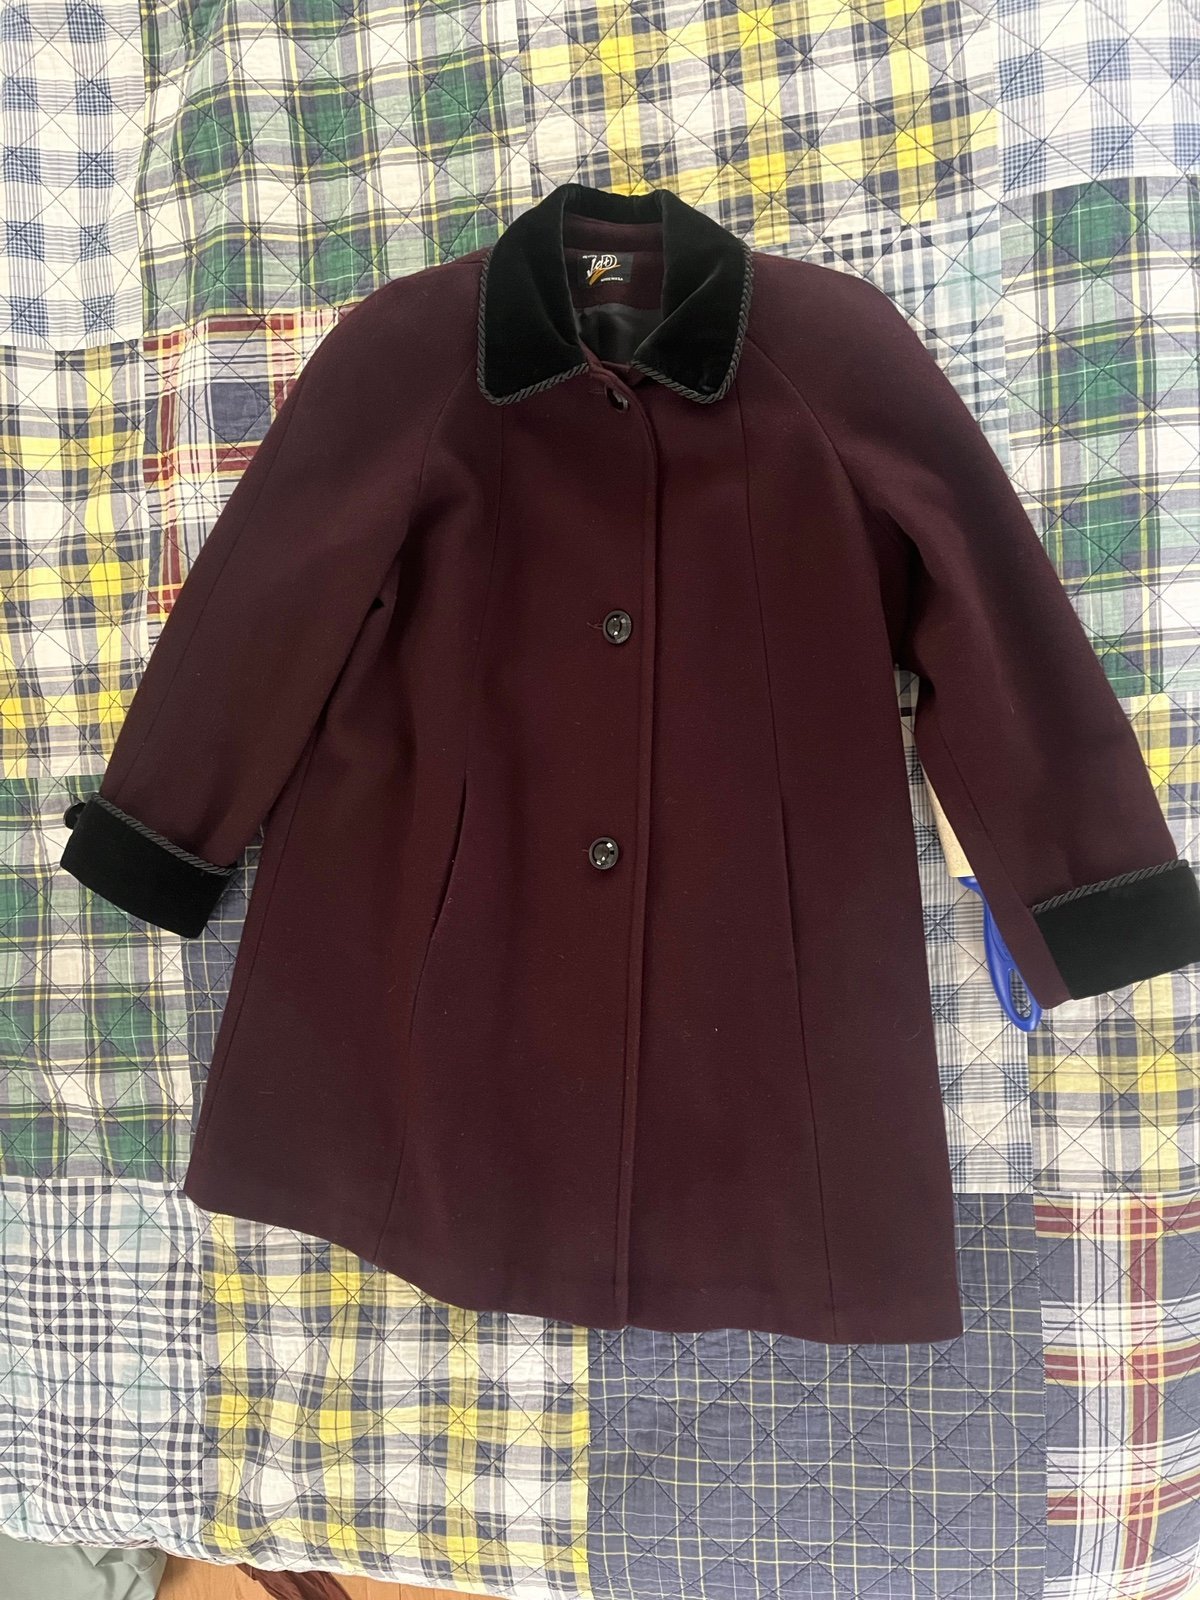 Classic JAD Burgundy 100% Wool Long Coat Hidden Pockets Black Velvet Trim pKP4dGTFz